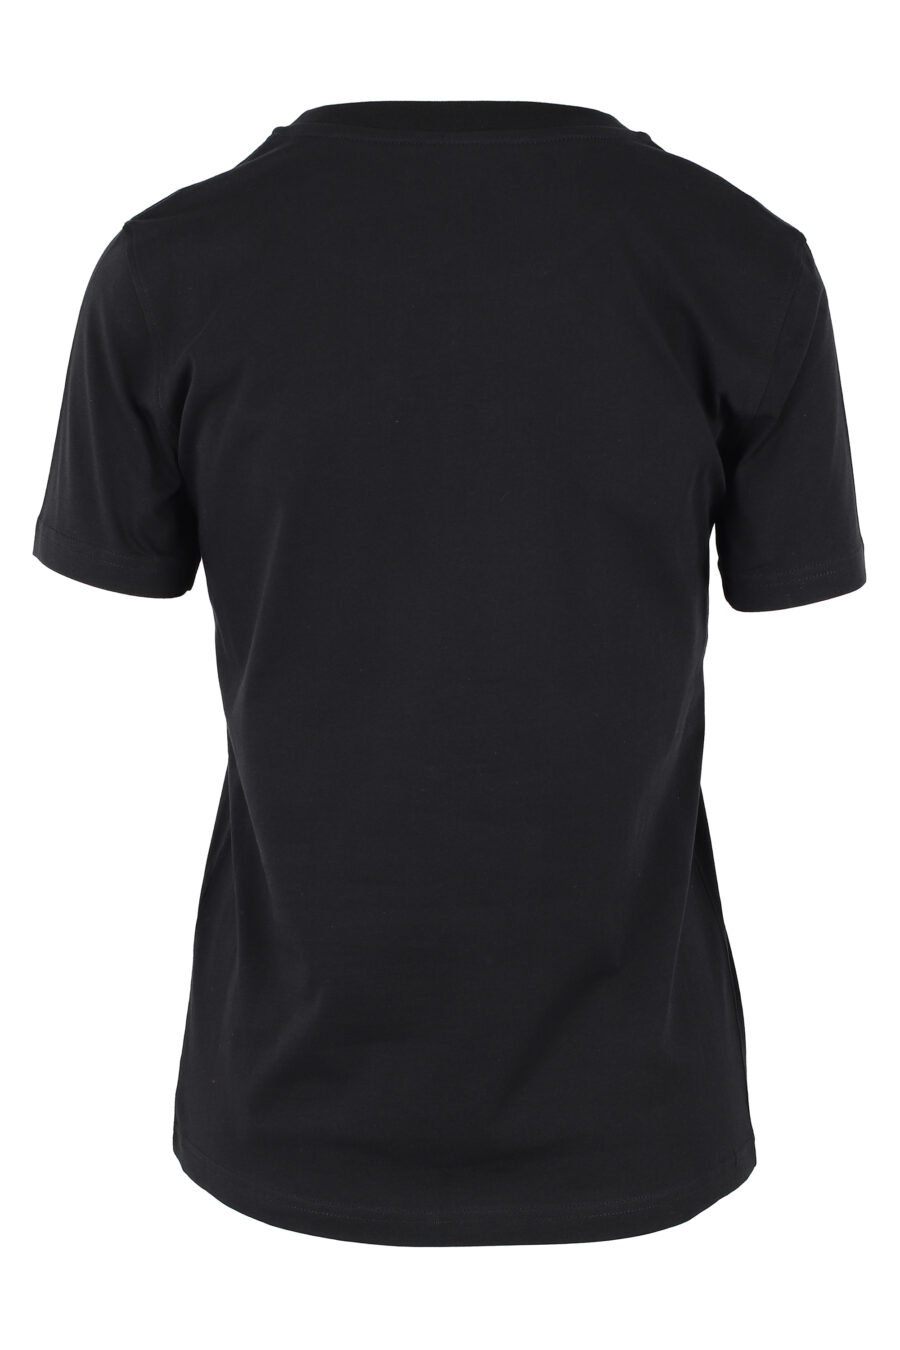 T-shirt noir avec logo monochrome - IMG 5040